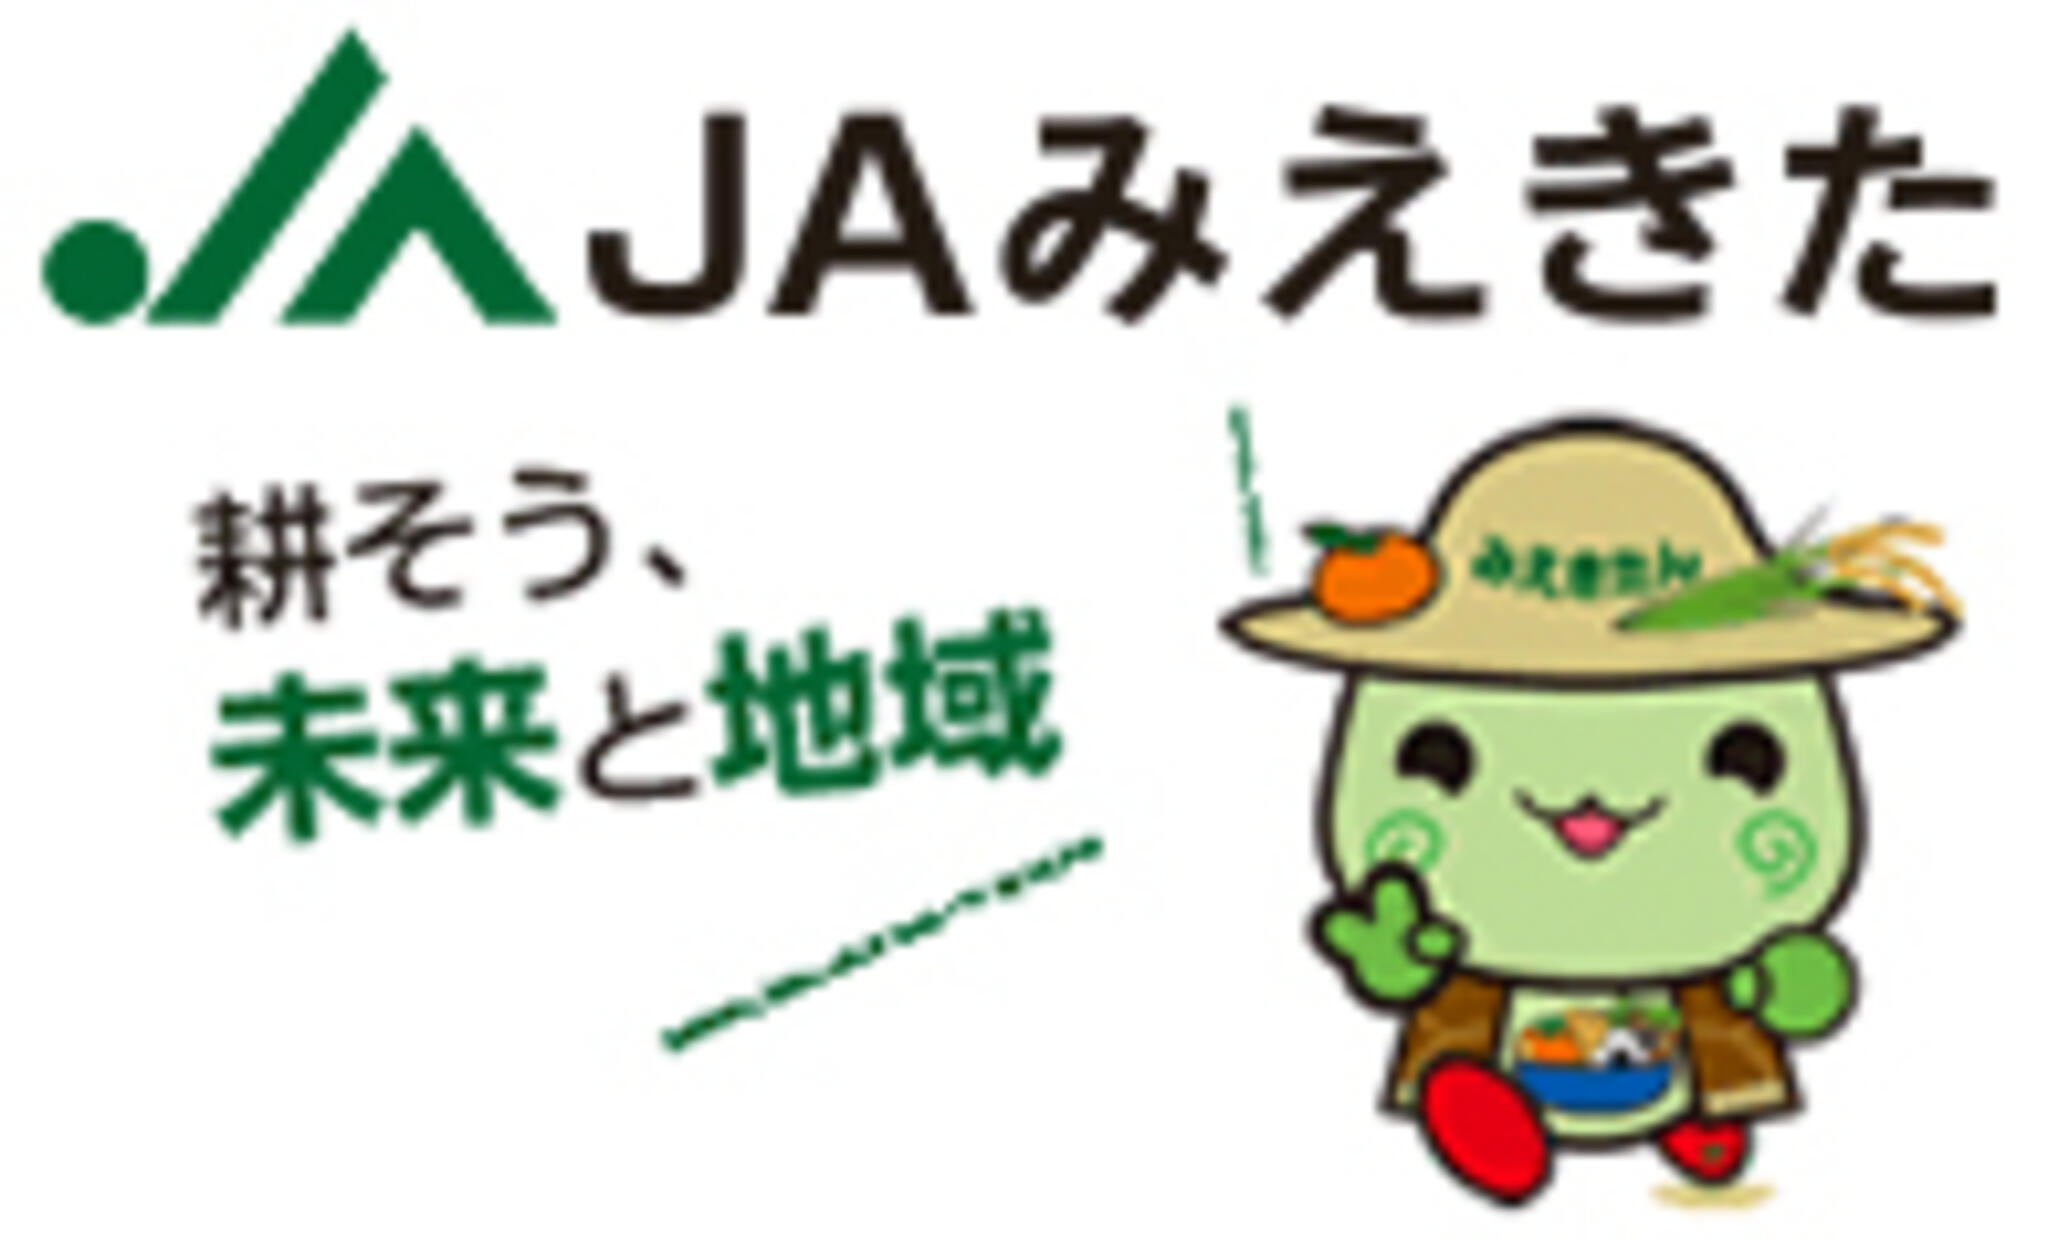 JAバンク ATM 三重北農業協同組合(JAみえきた)桑名支店の代表写真1